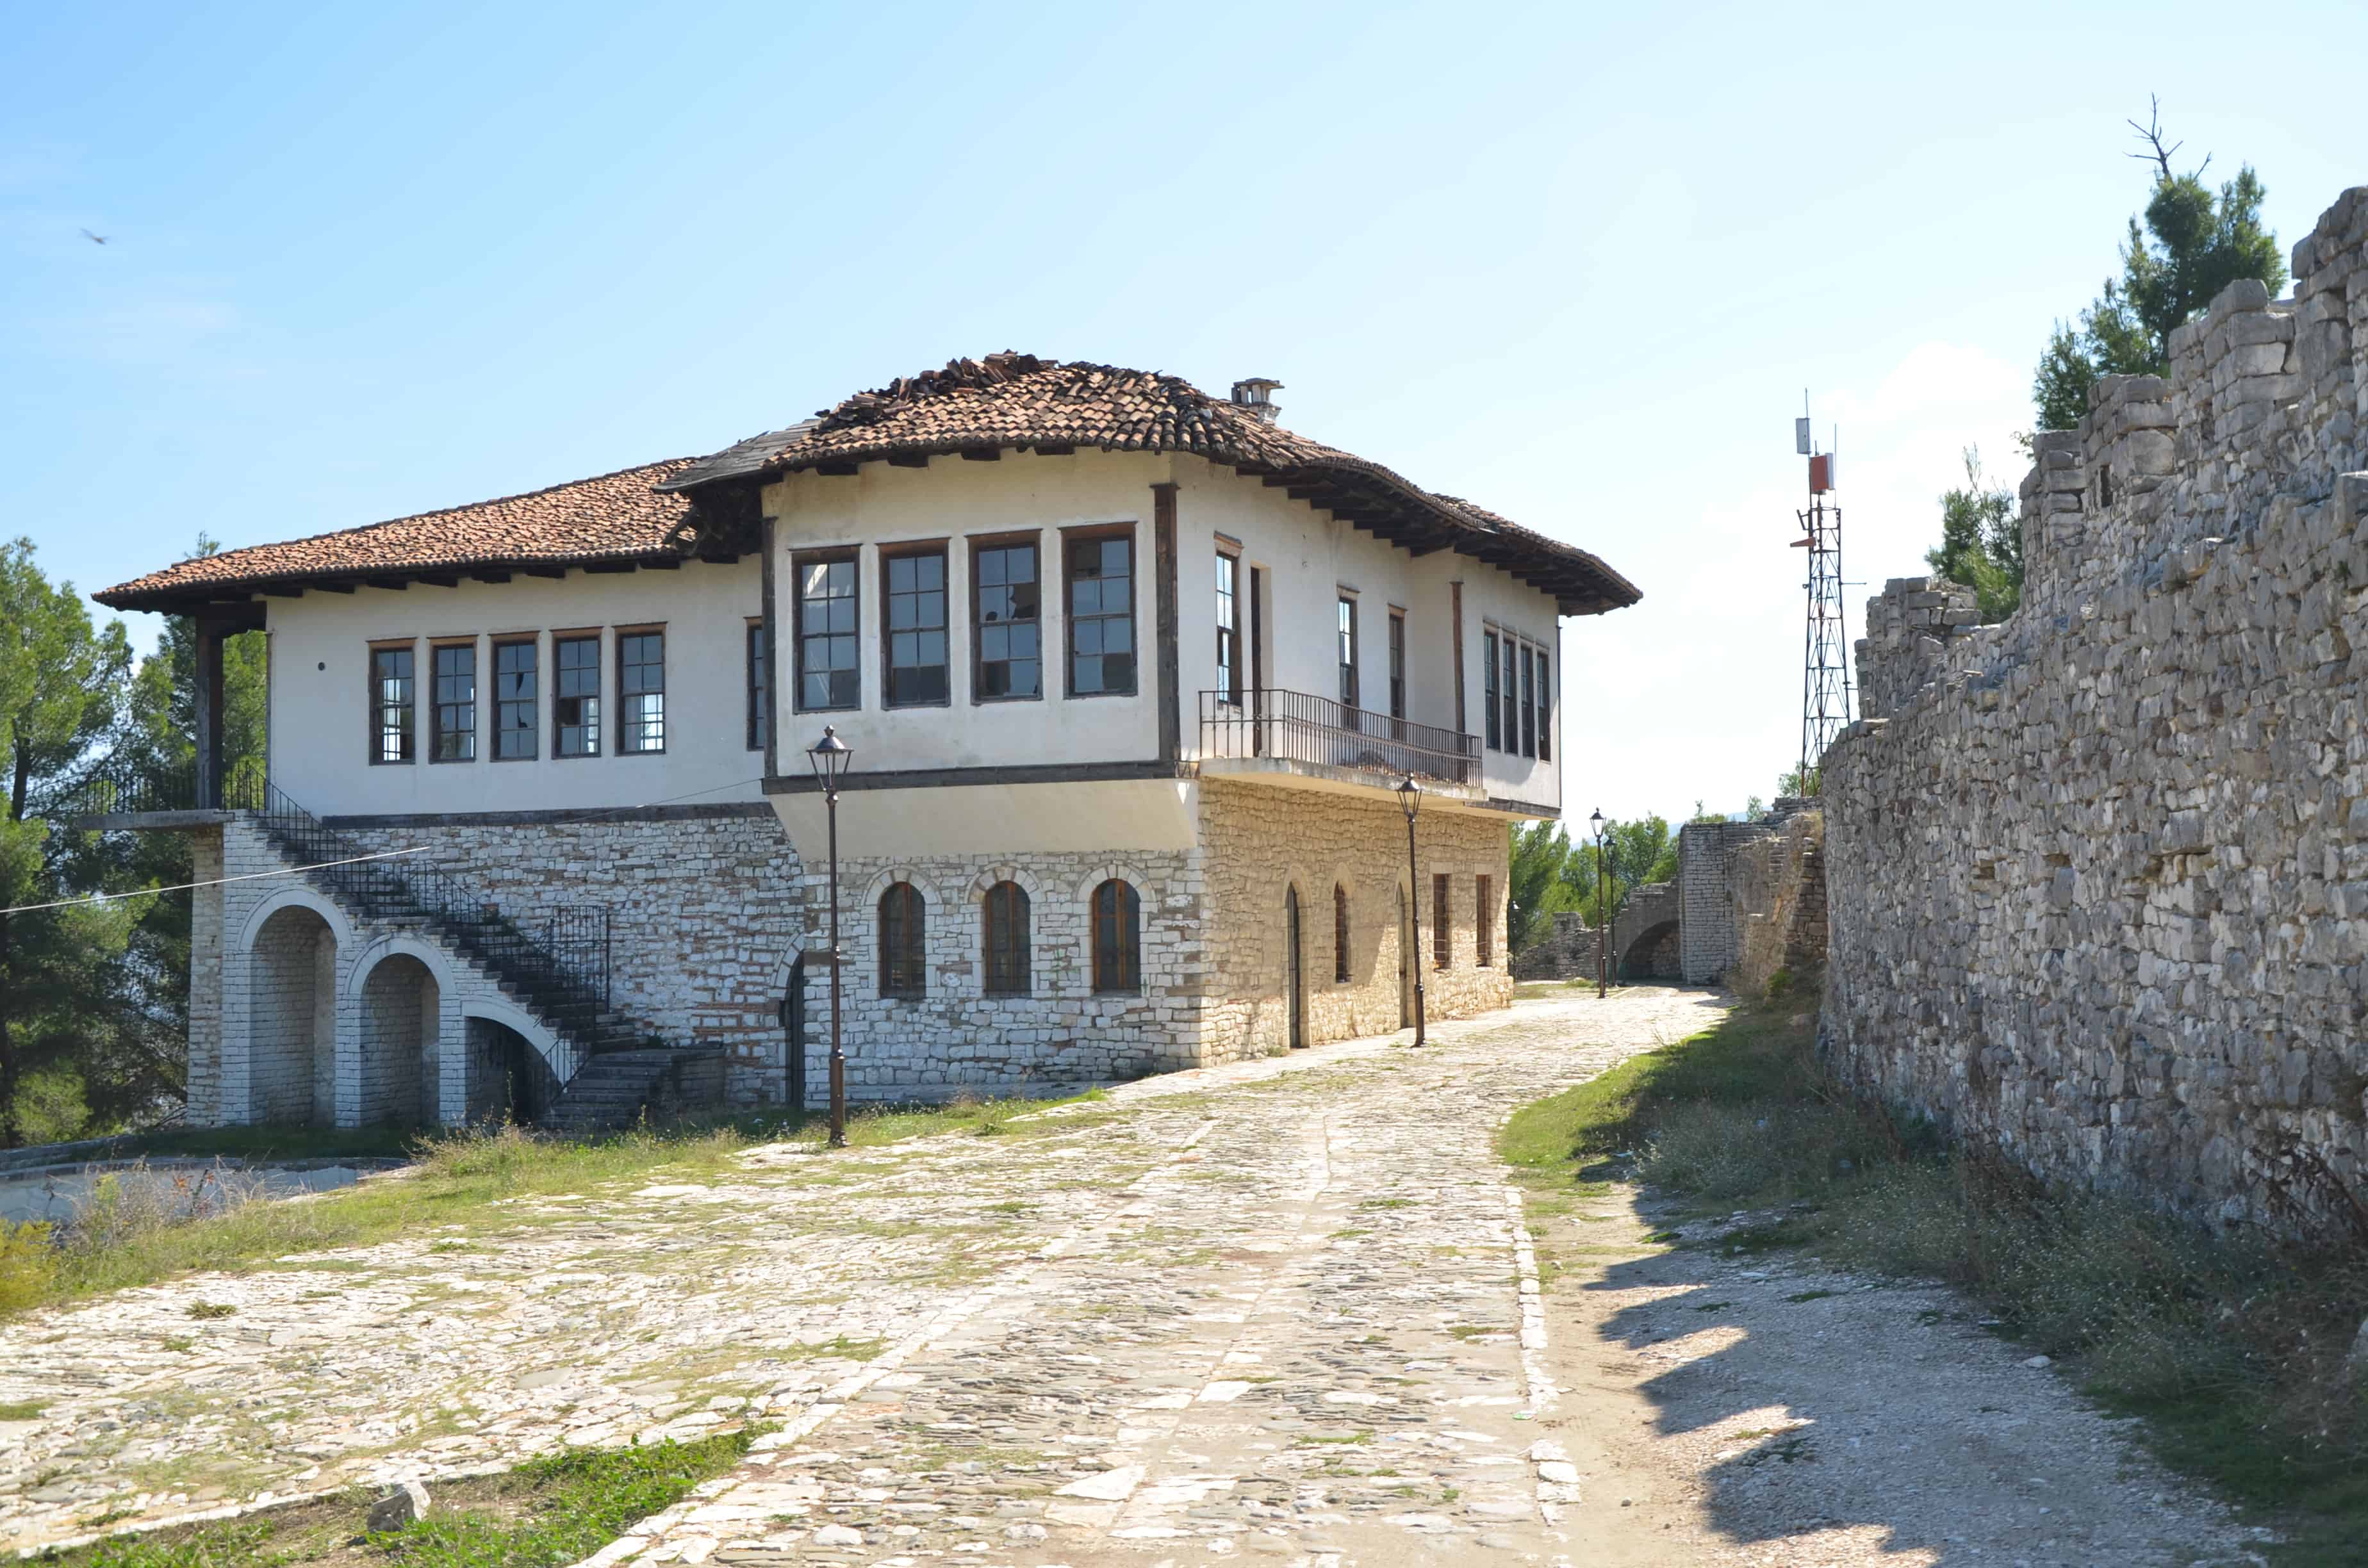 Church of St. George in Berat, Albania